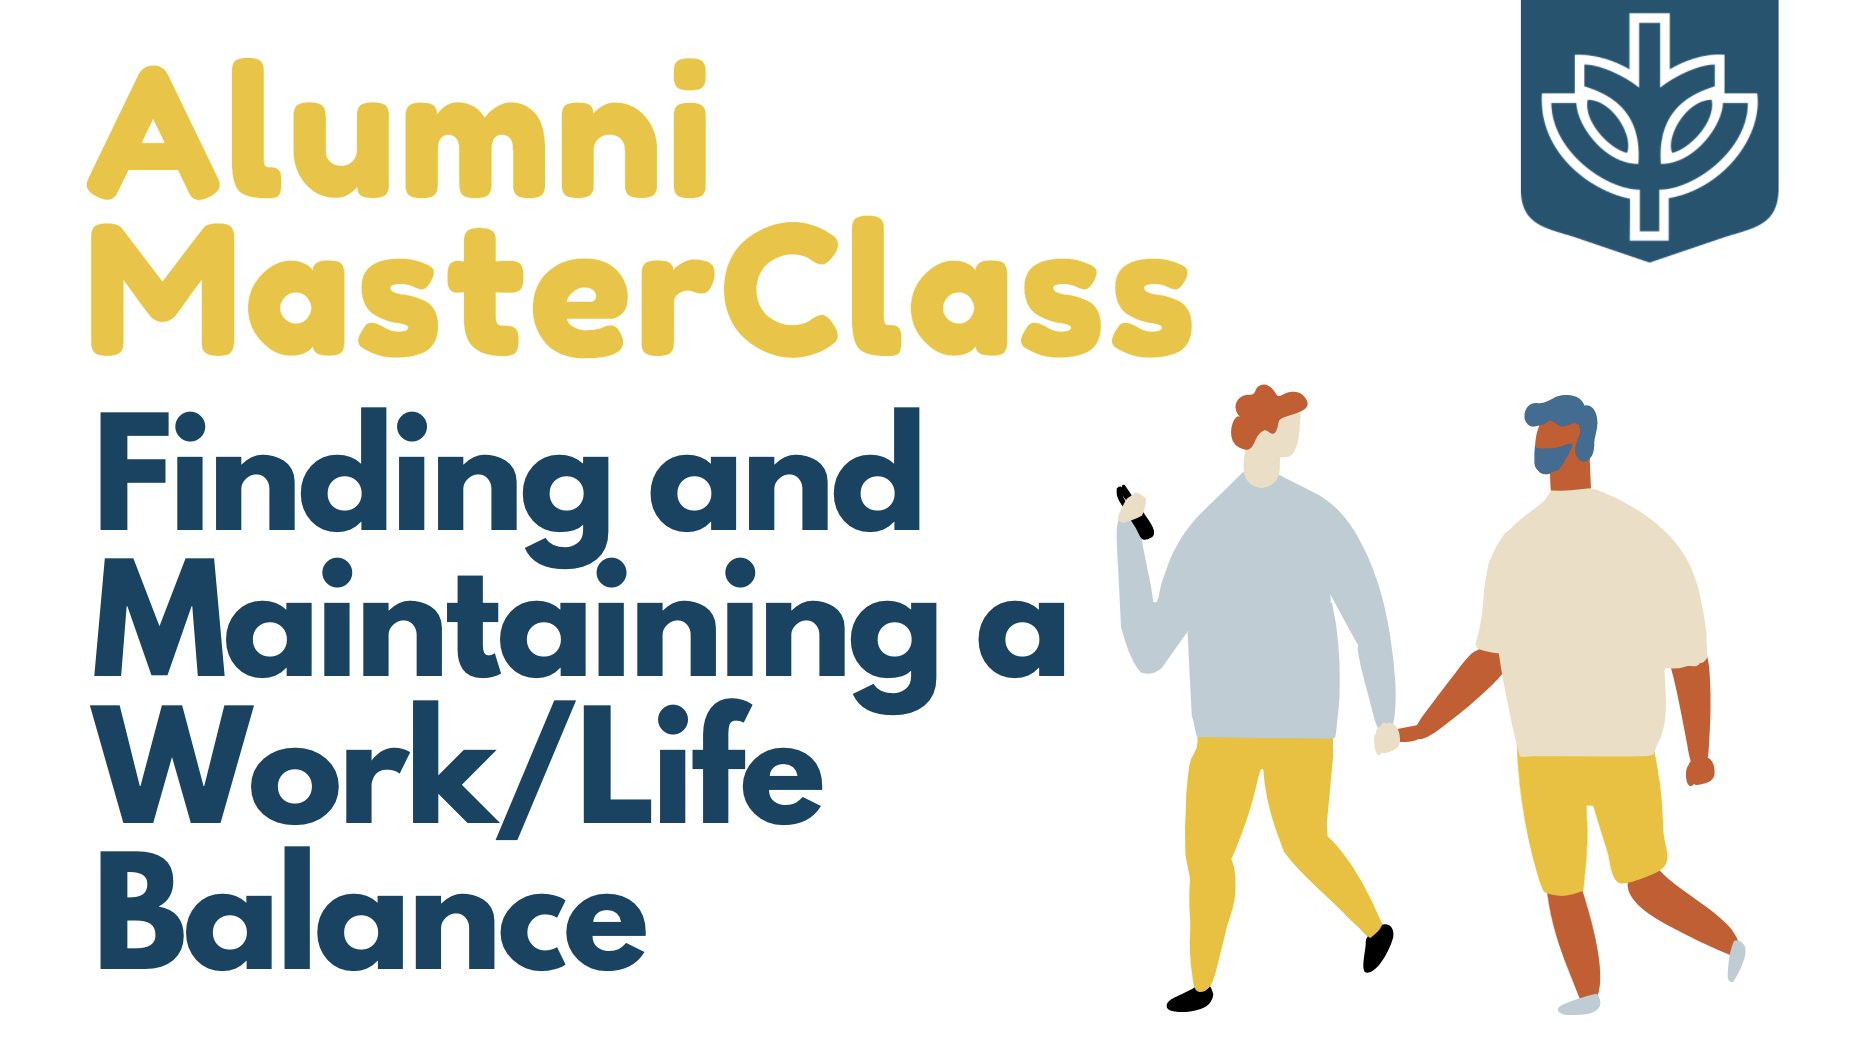 Alumni MasterClass: Finding and Maintaining a Work/Life Balance